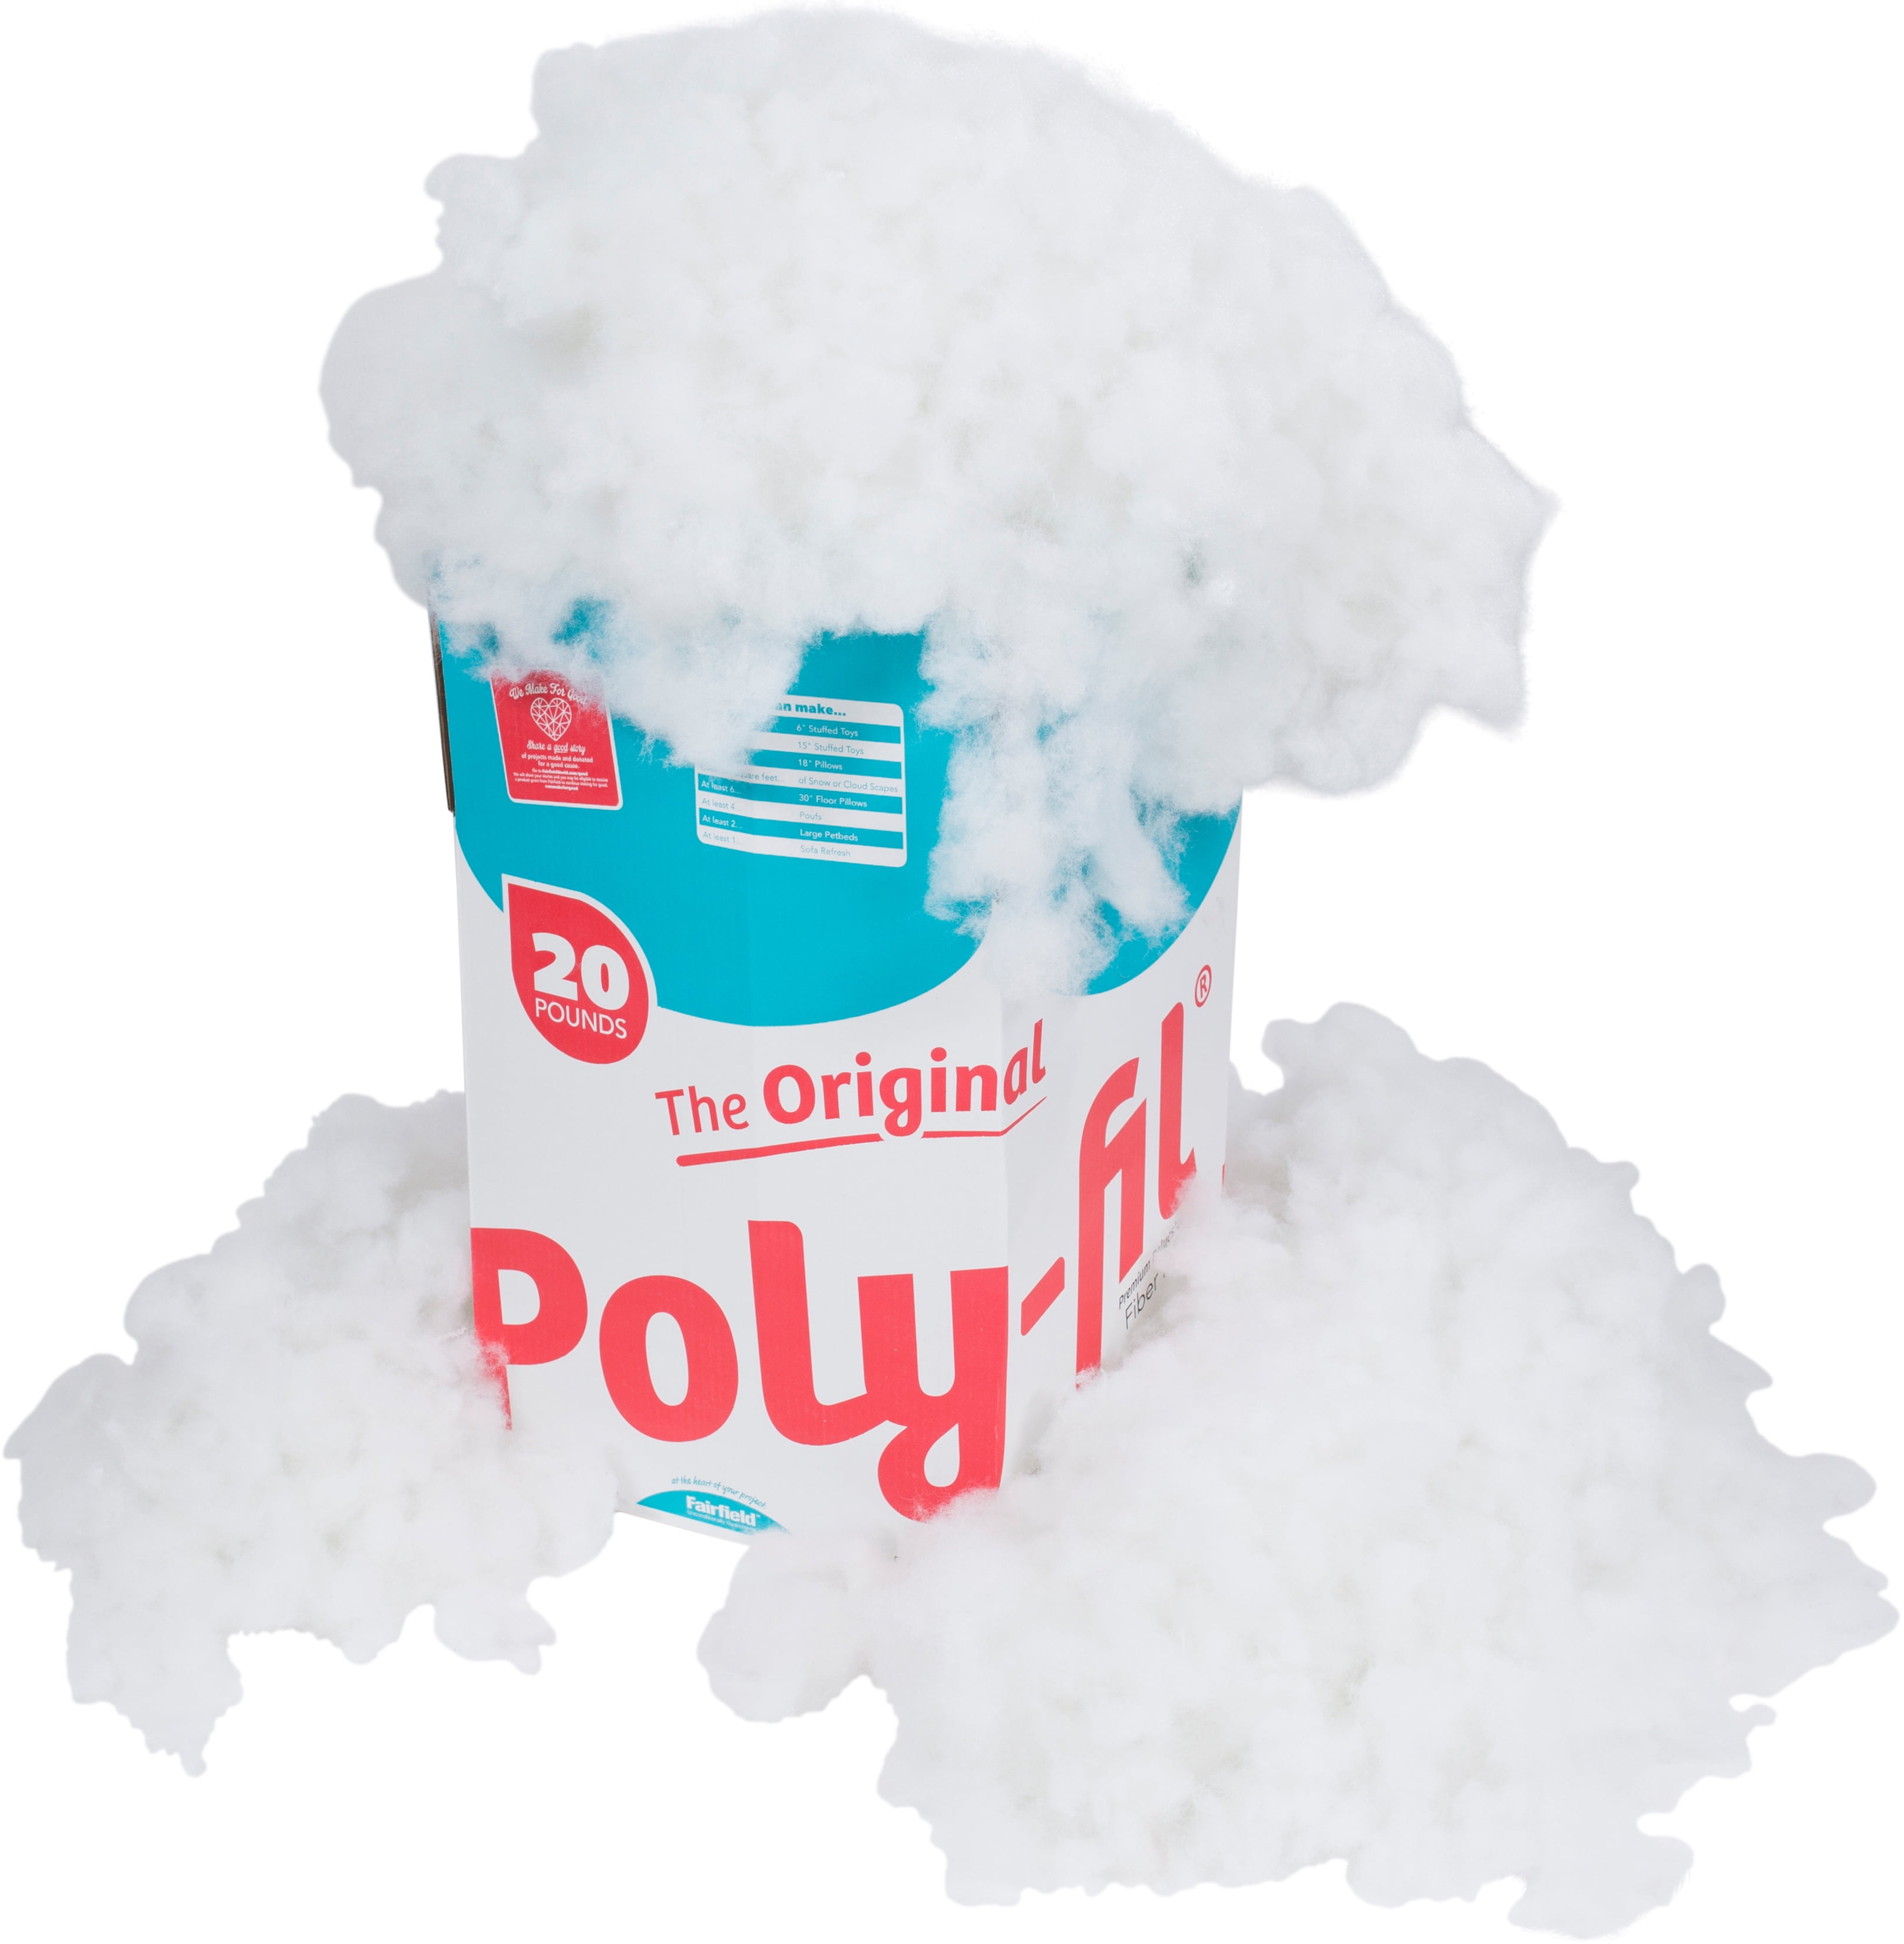 Poly-Fil® 100% Polyester Fiber Fill - 20 Pound Box - Fairfield World Shop